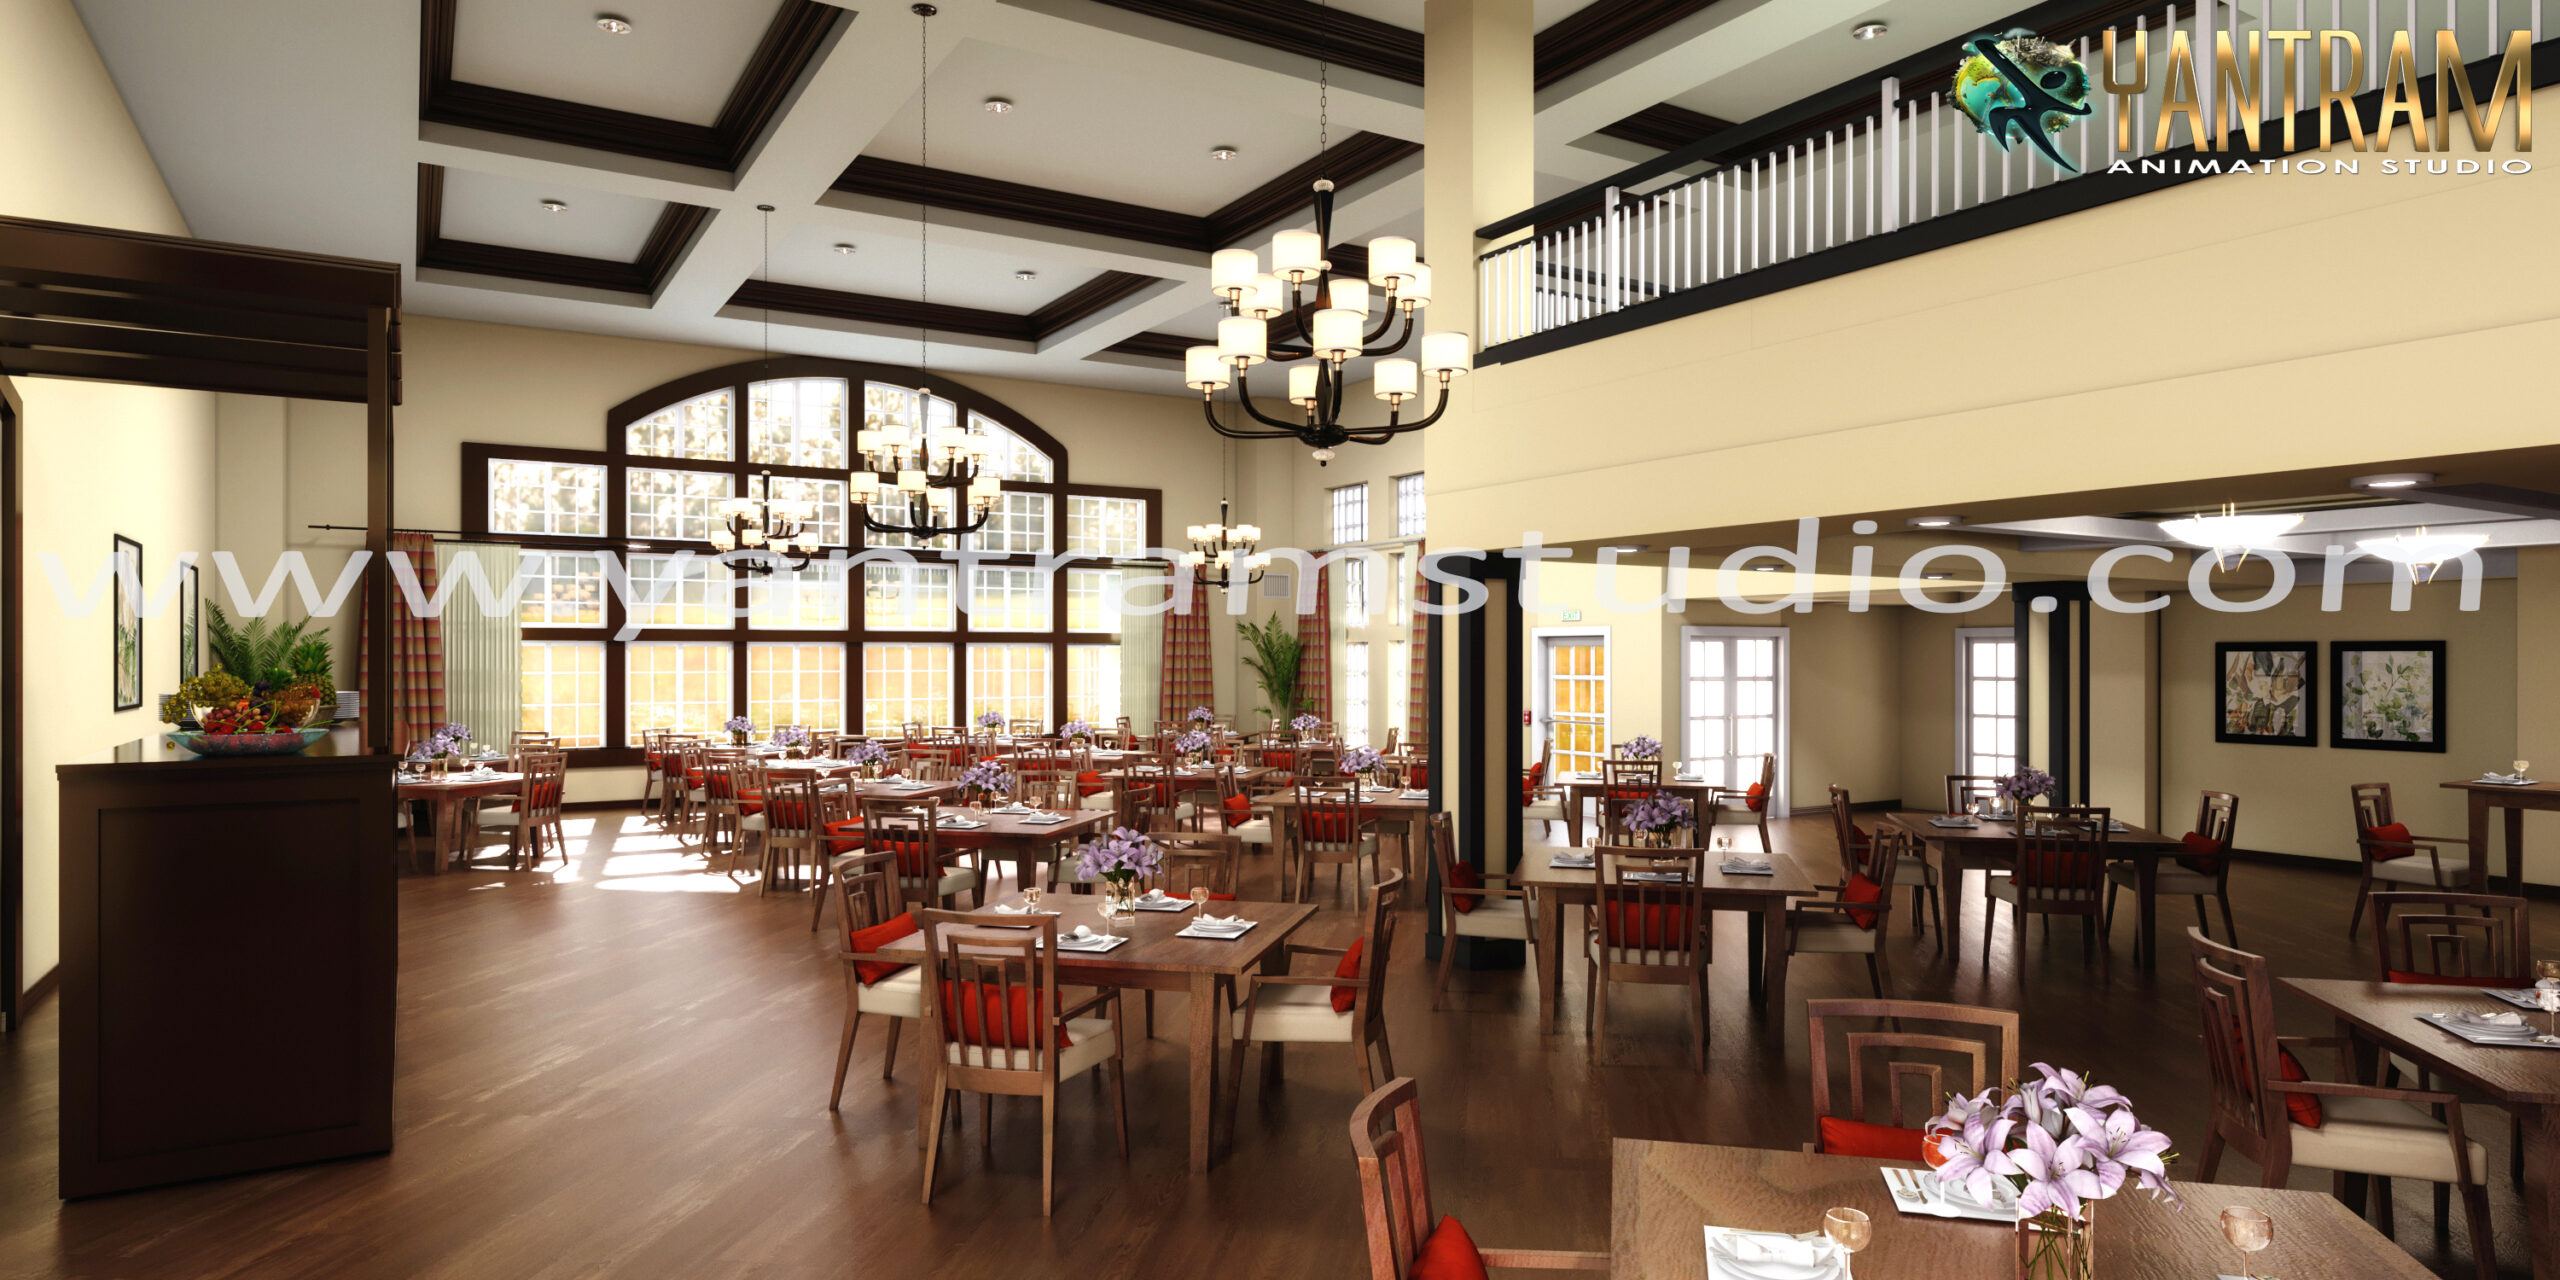 Best Restaurant Design For 3d Interior Design by Yantram architectural Design Studio-Denton, Texas